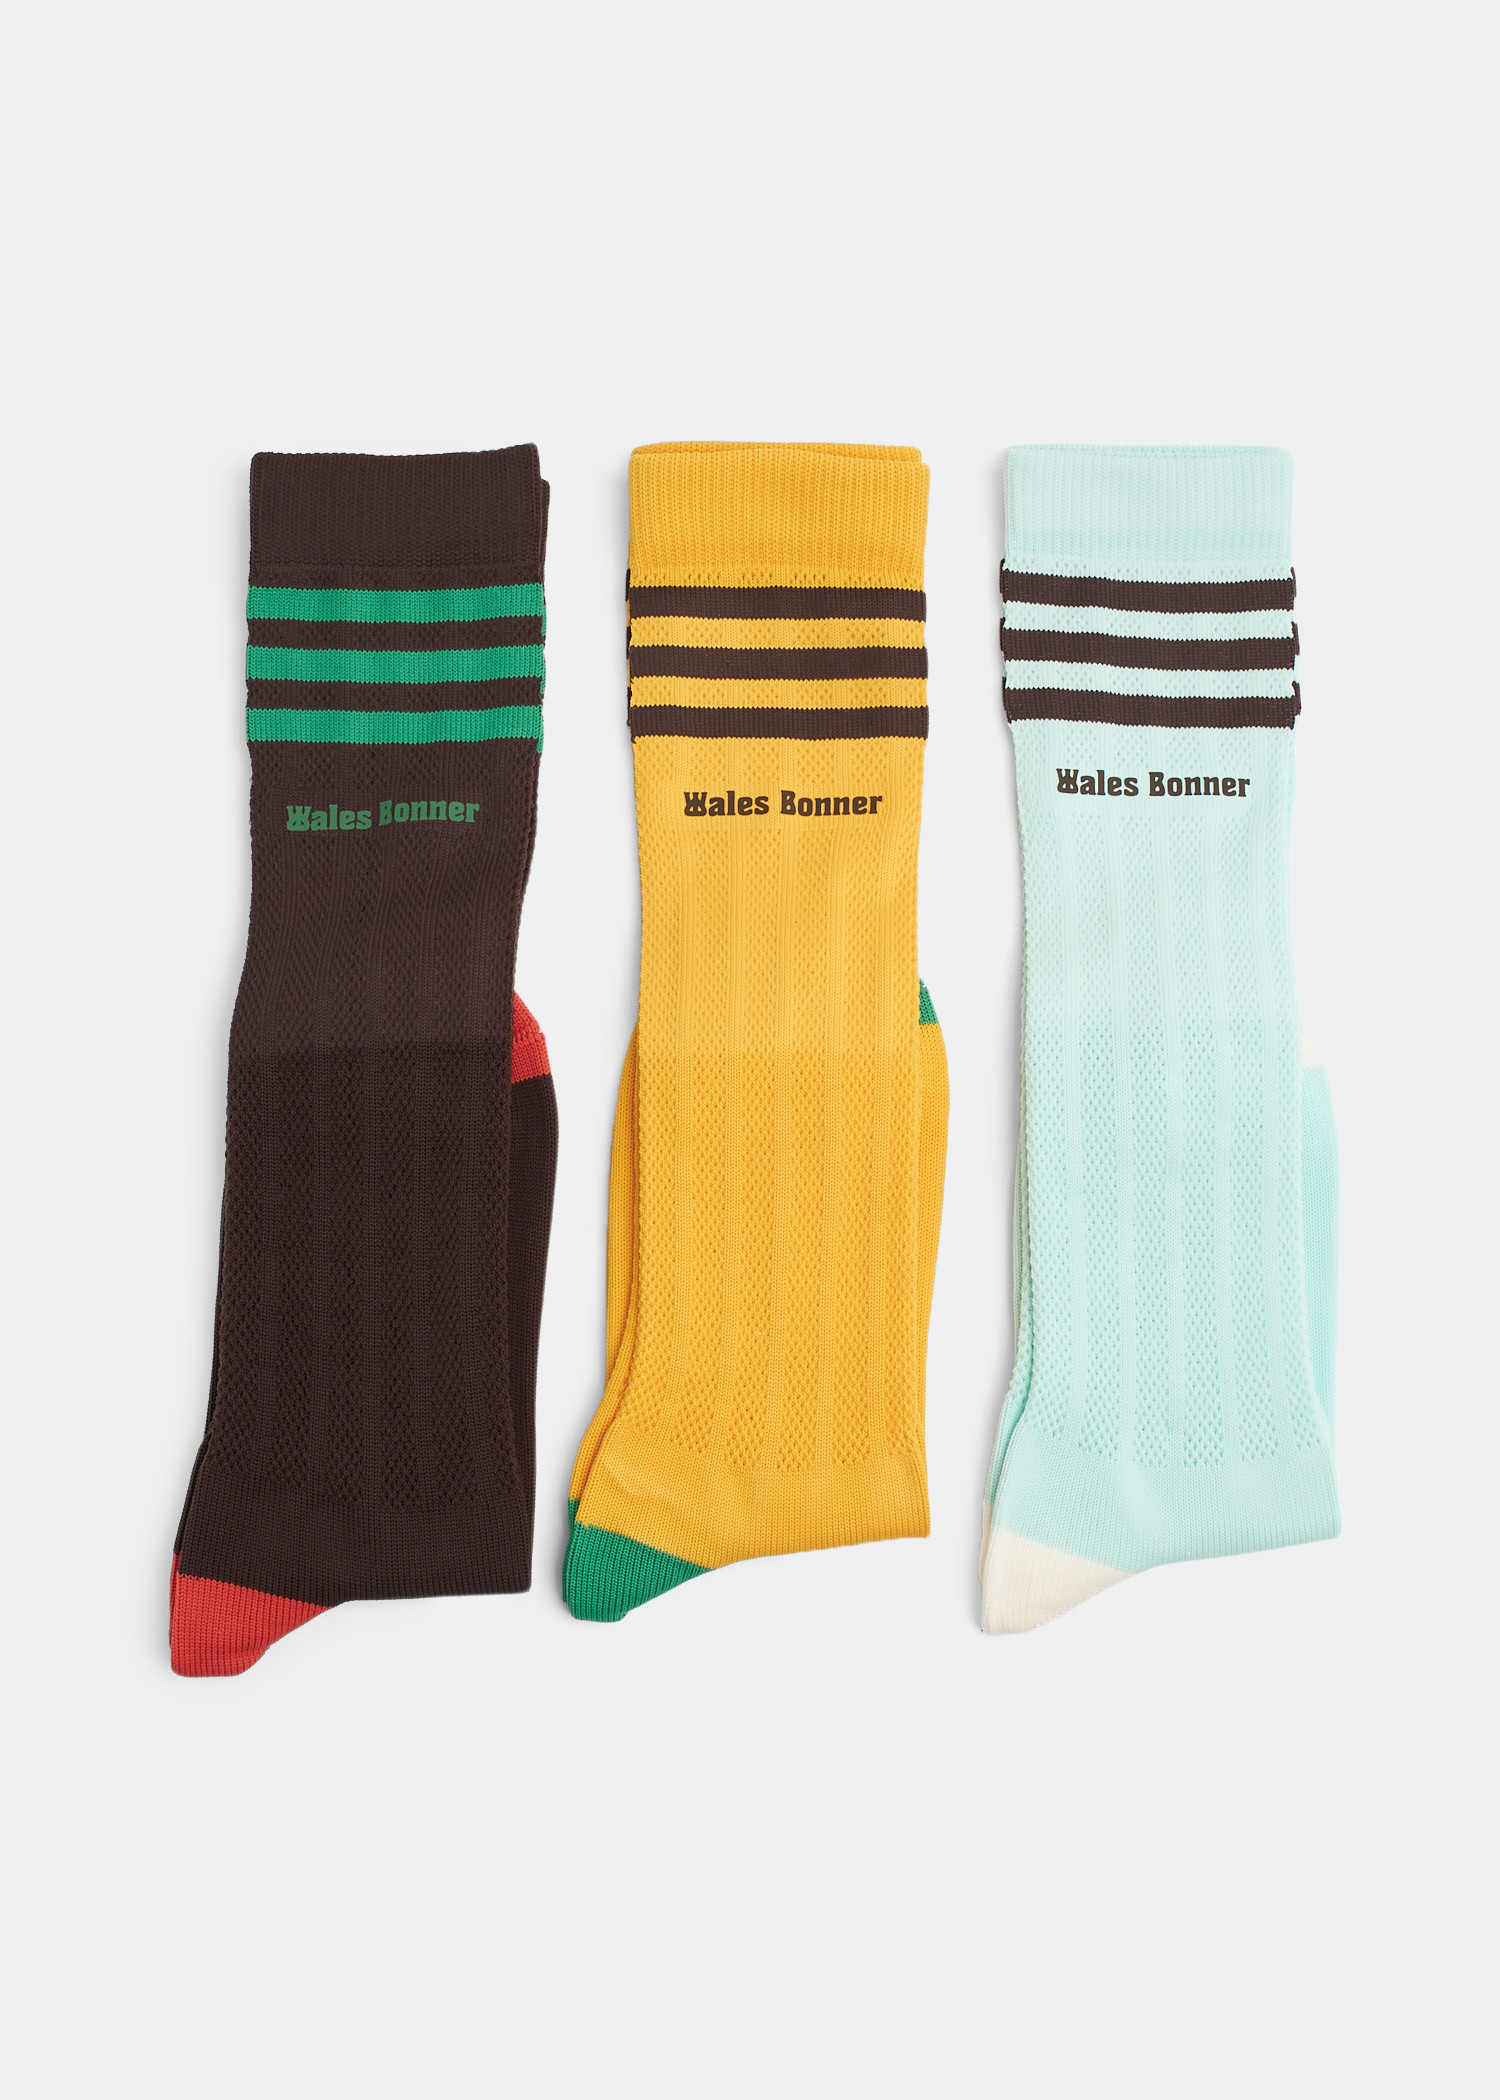 Adidas x Wales Bonner Crochet socks for Men - Multicolored in KSA 